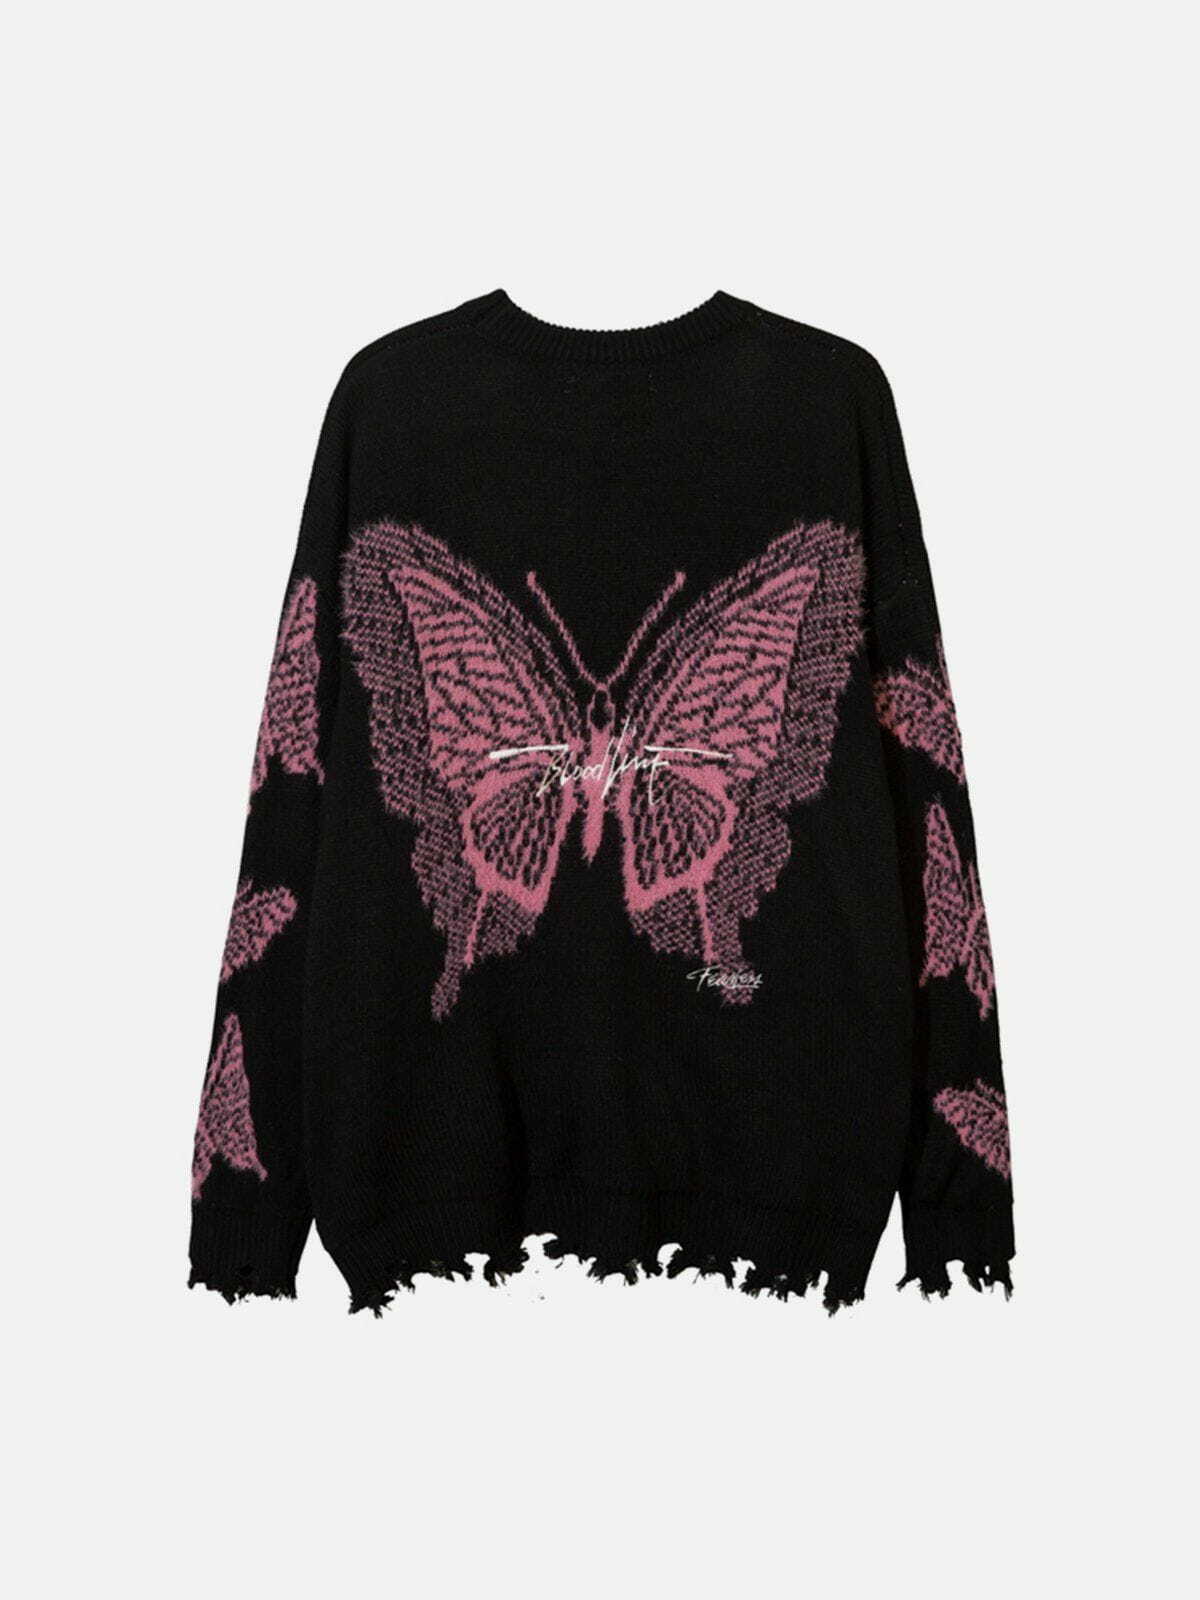 youthful butterfly cut hem sweater   chic knit design 5178